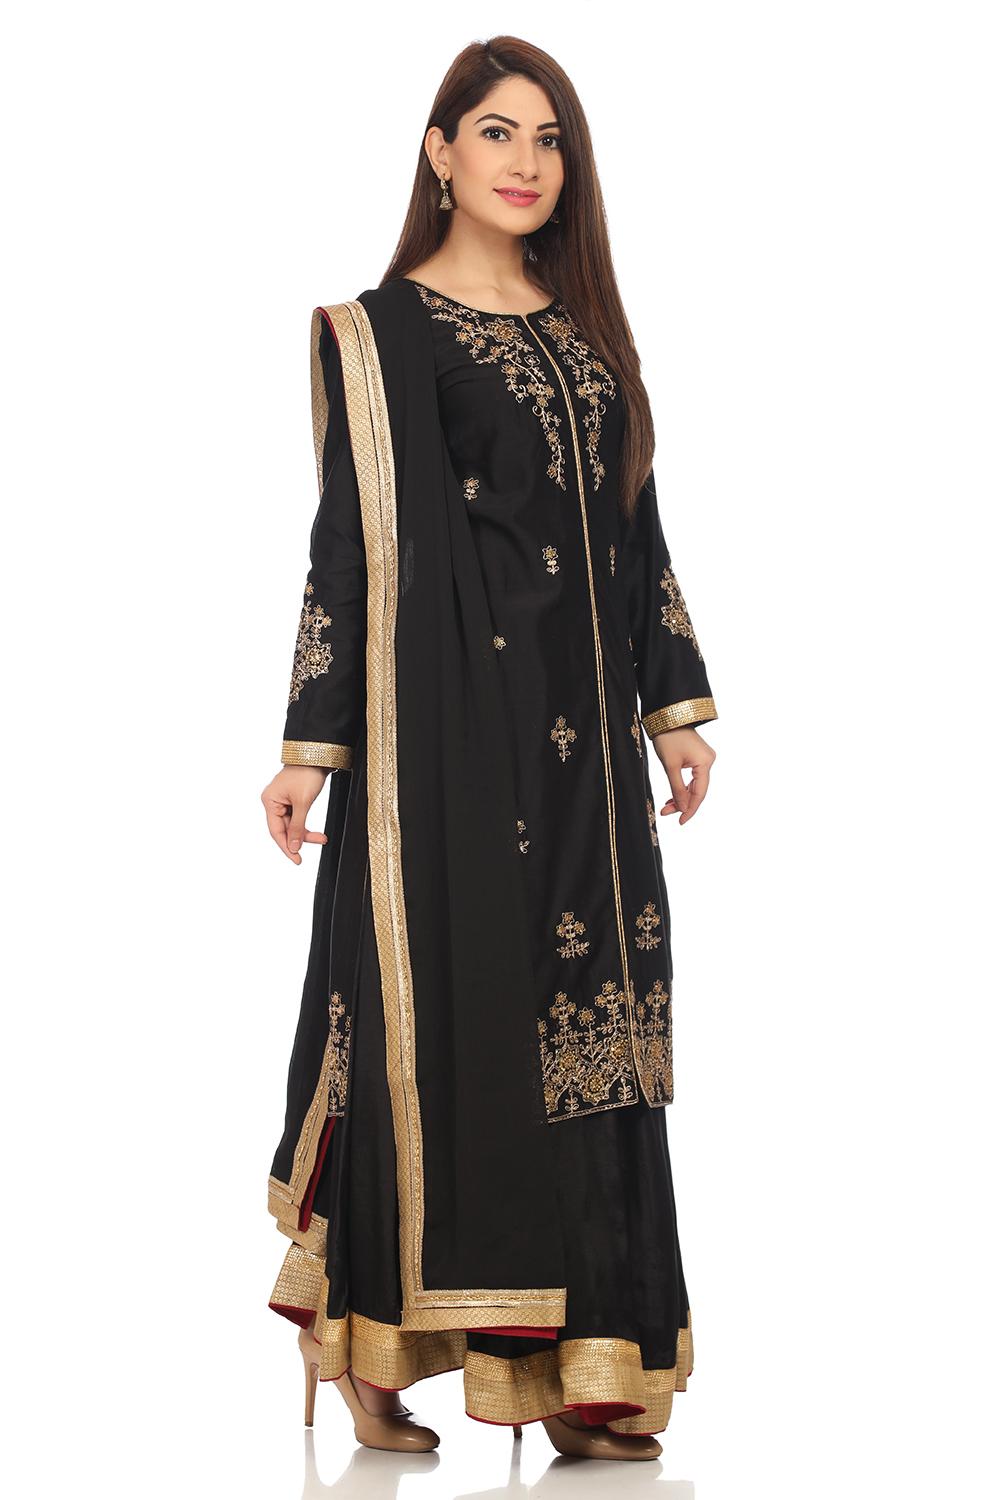 Buy Online Black Cotton Silk Flared Suit Set for Women & Girls at Best ...